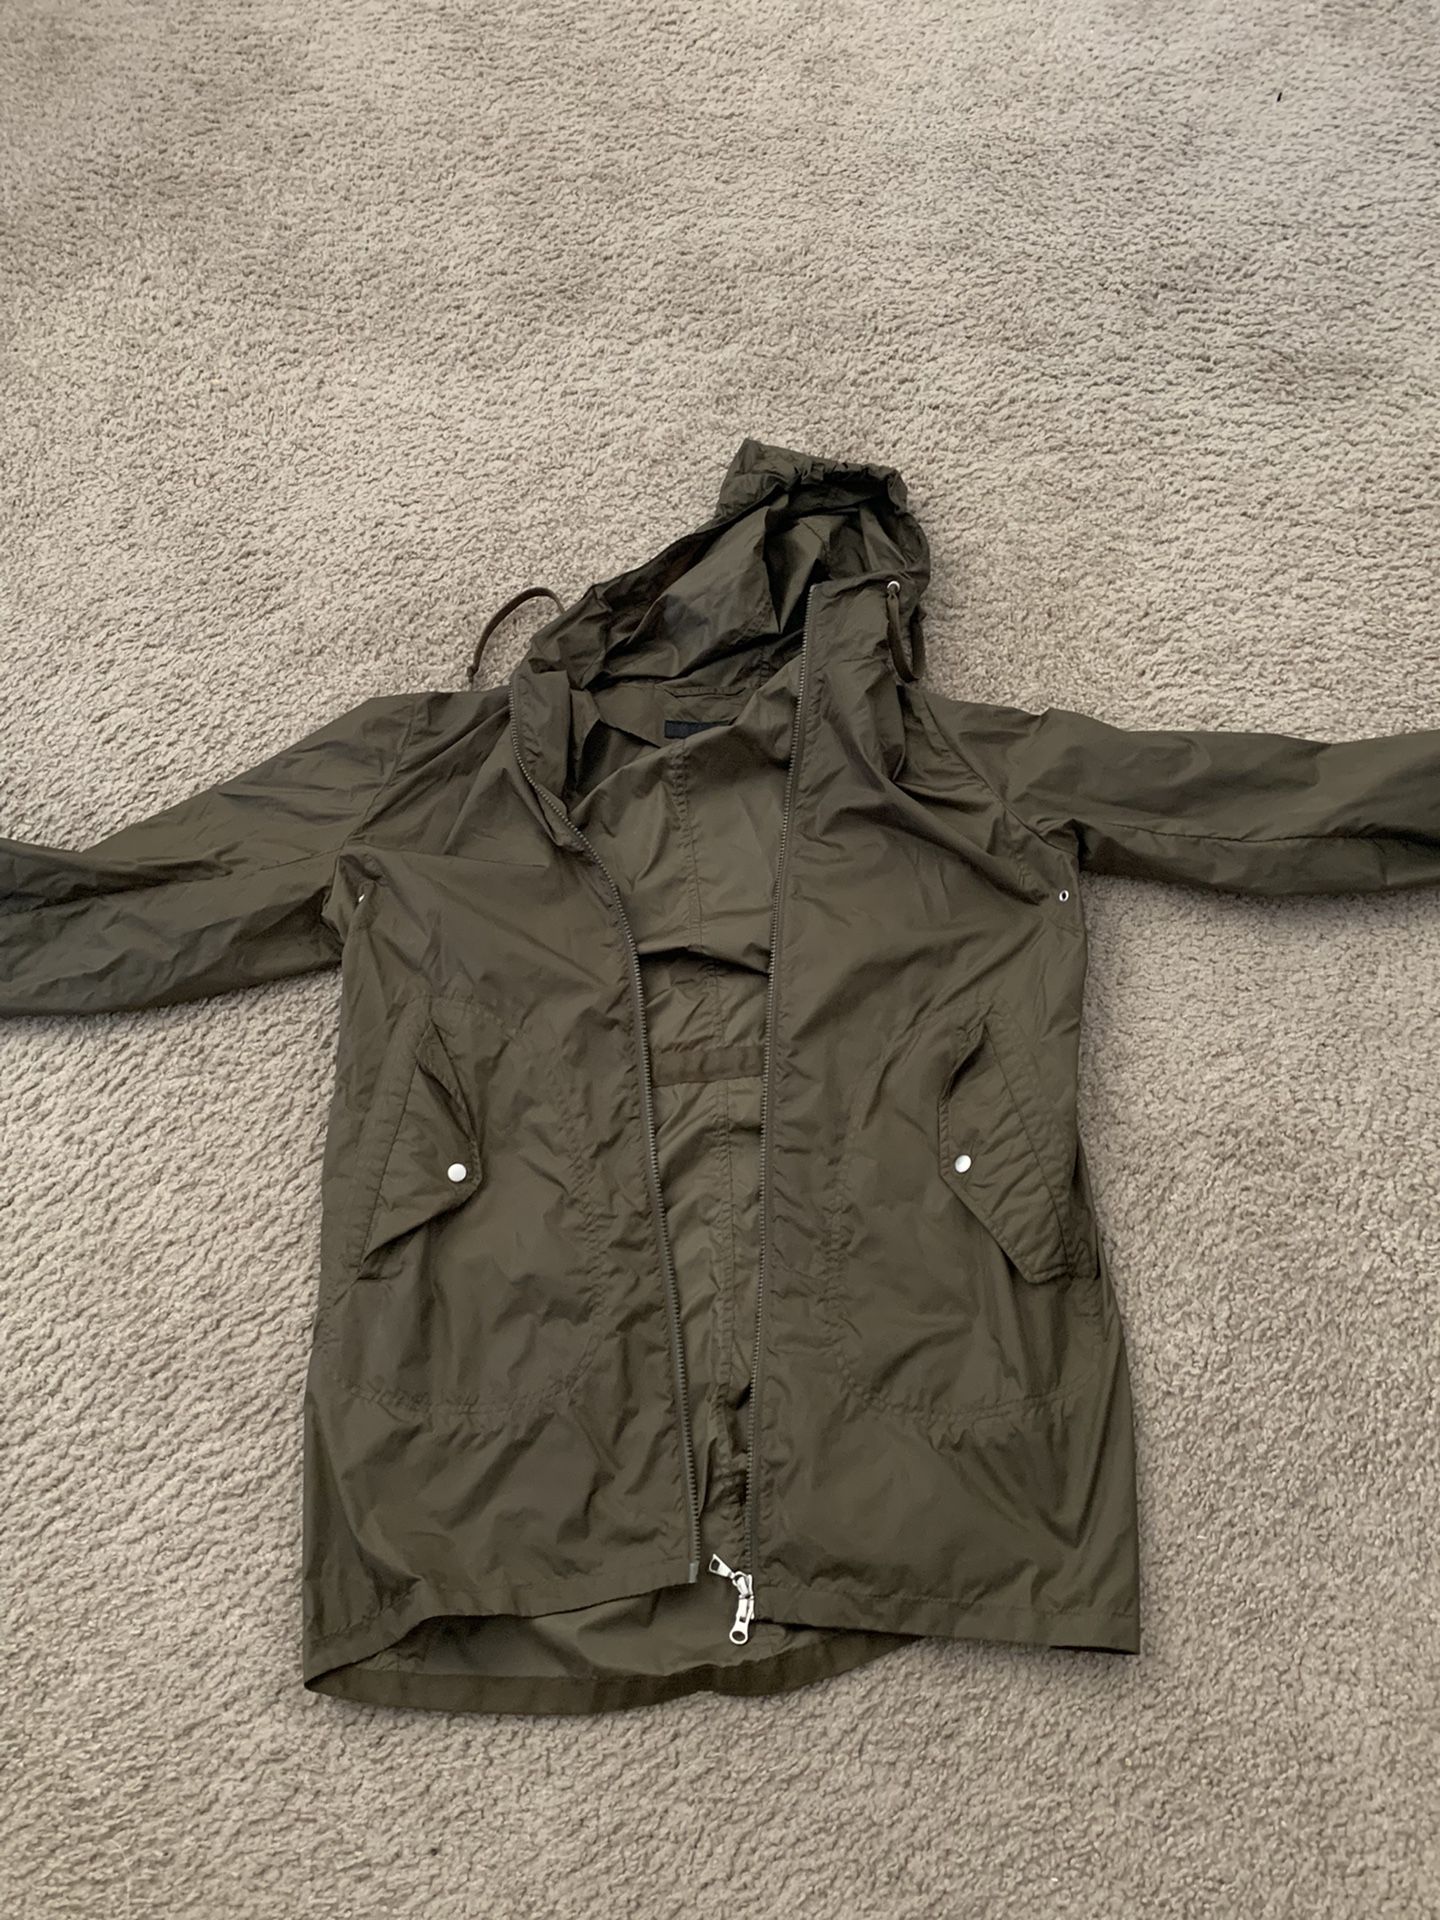 Uniqlo Parka Jacket in Olive Size: XS